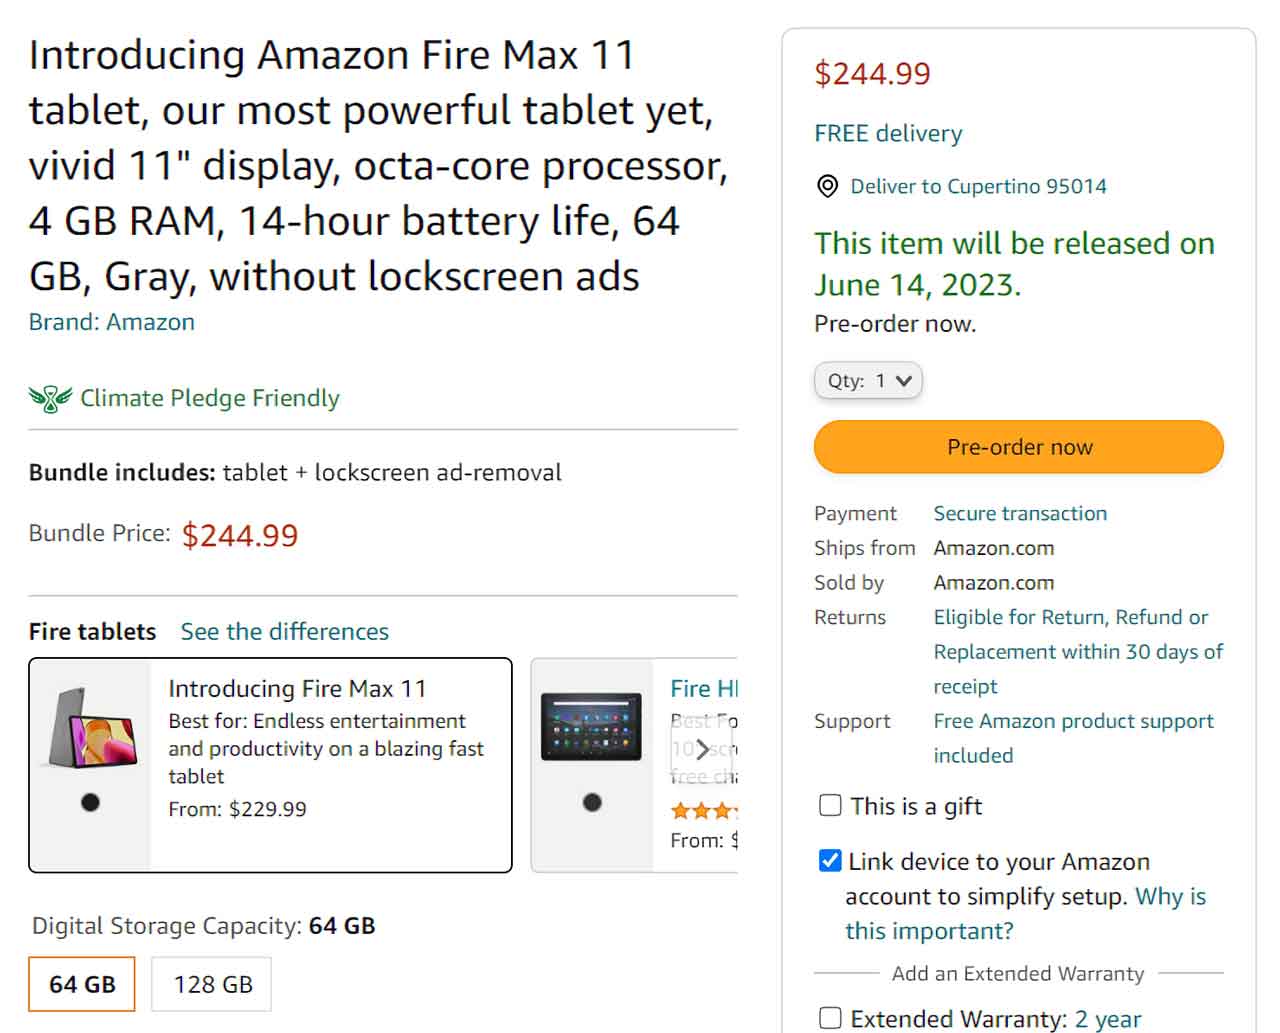 Amazon Fireタブレット Fire Max 11 64GBモデル $244.99 34,980円